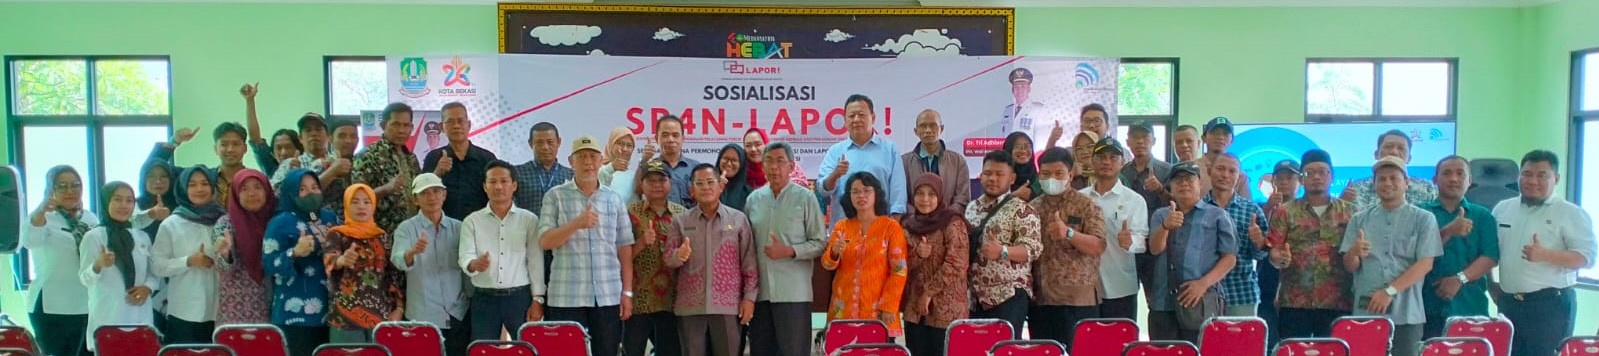 Diskominfostandi Kunjungi Kecamatan Medan Satria Sosialisasikan SP4N-LAPOR!